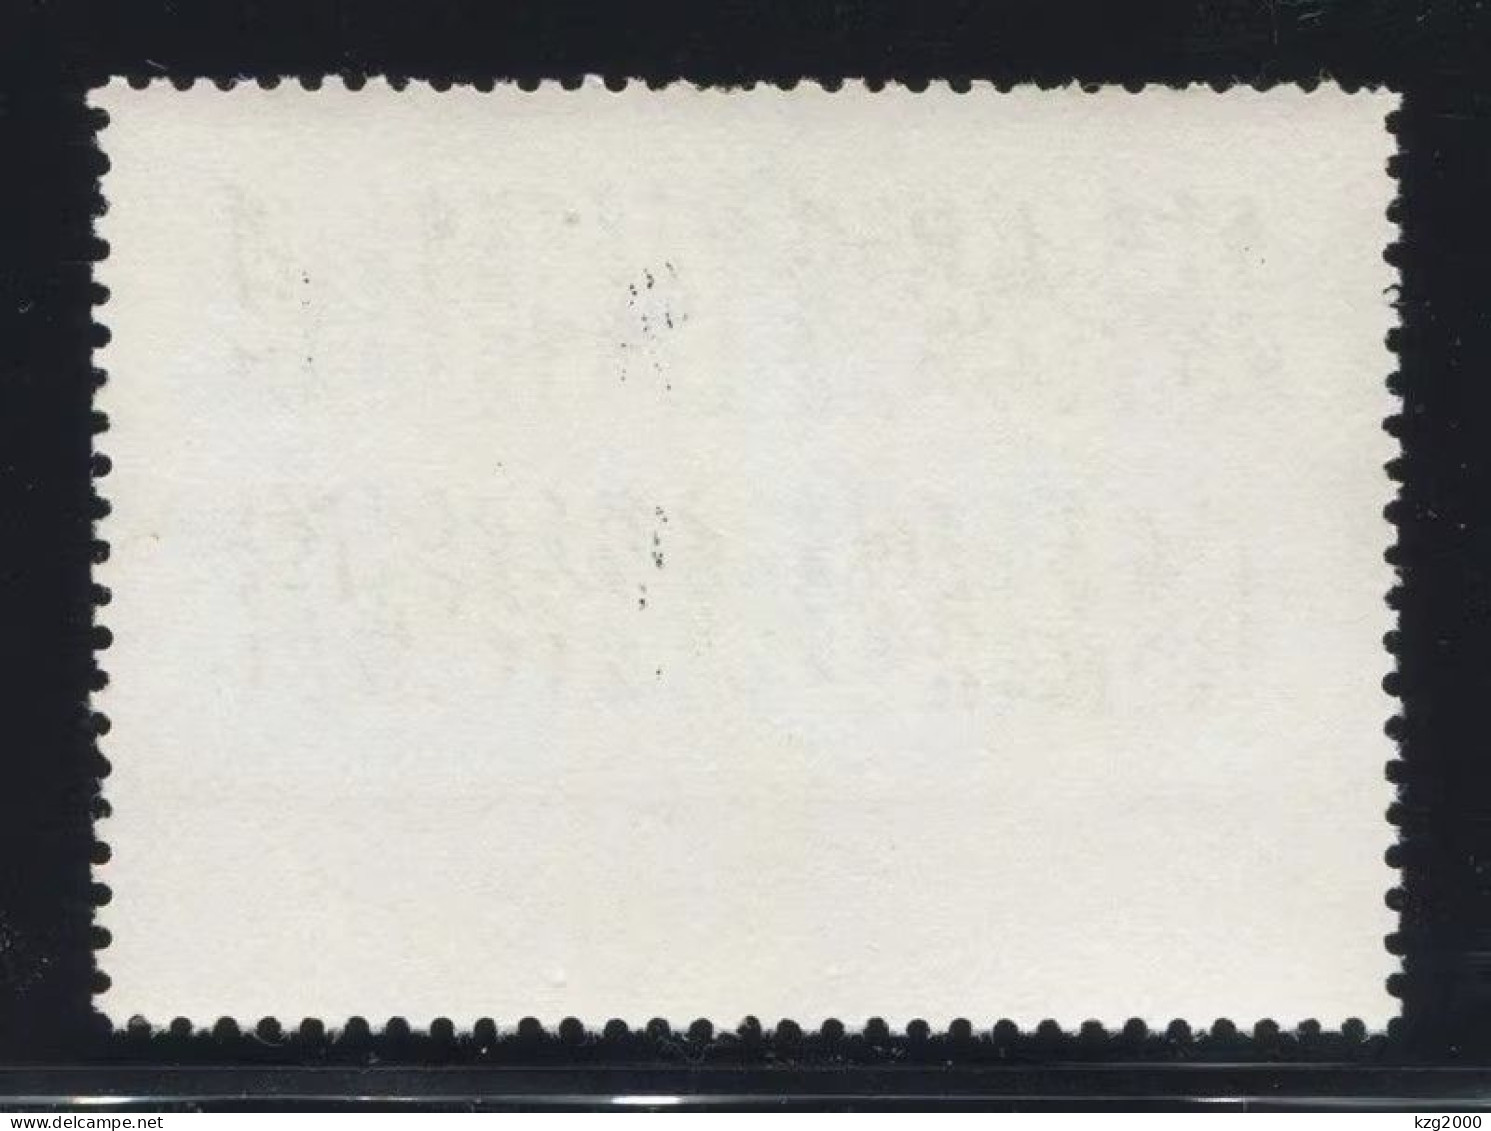 China Stamp 1967 W7 Chairman Mao Poem Stamps 10C ( Du Li ) OG - Neufs